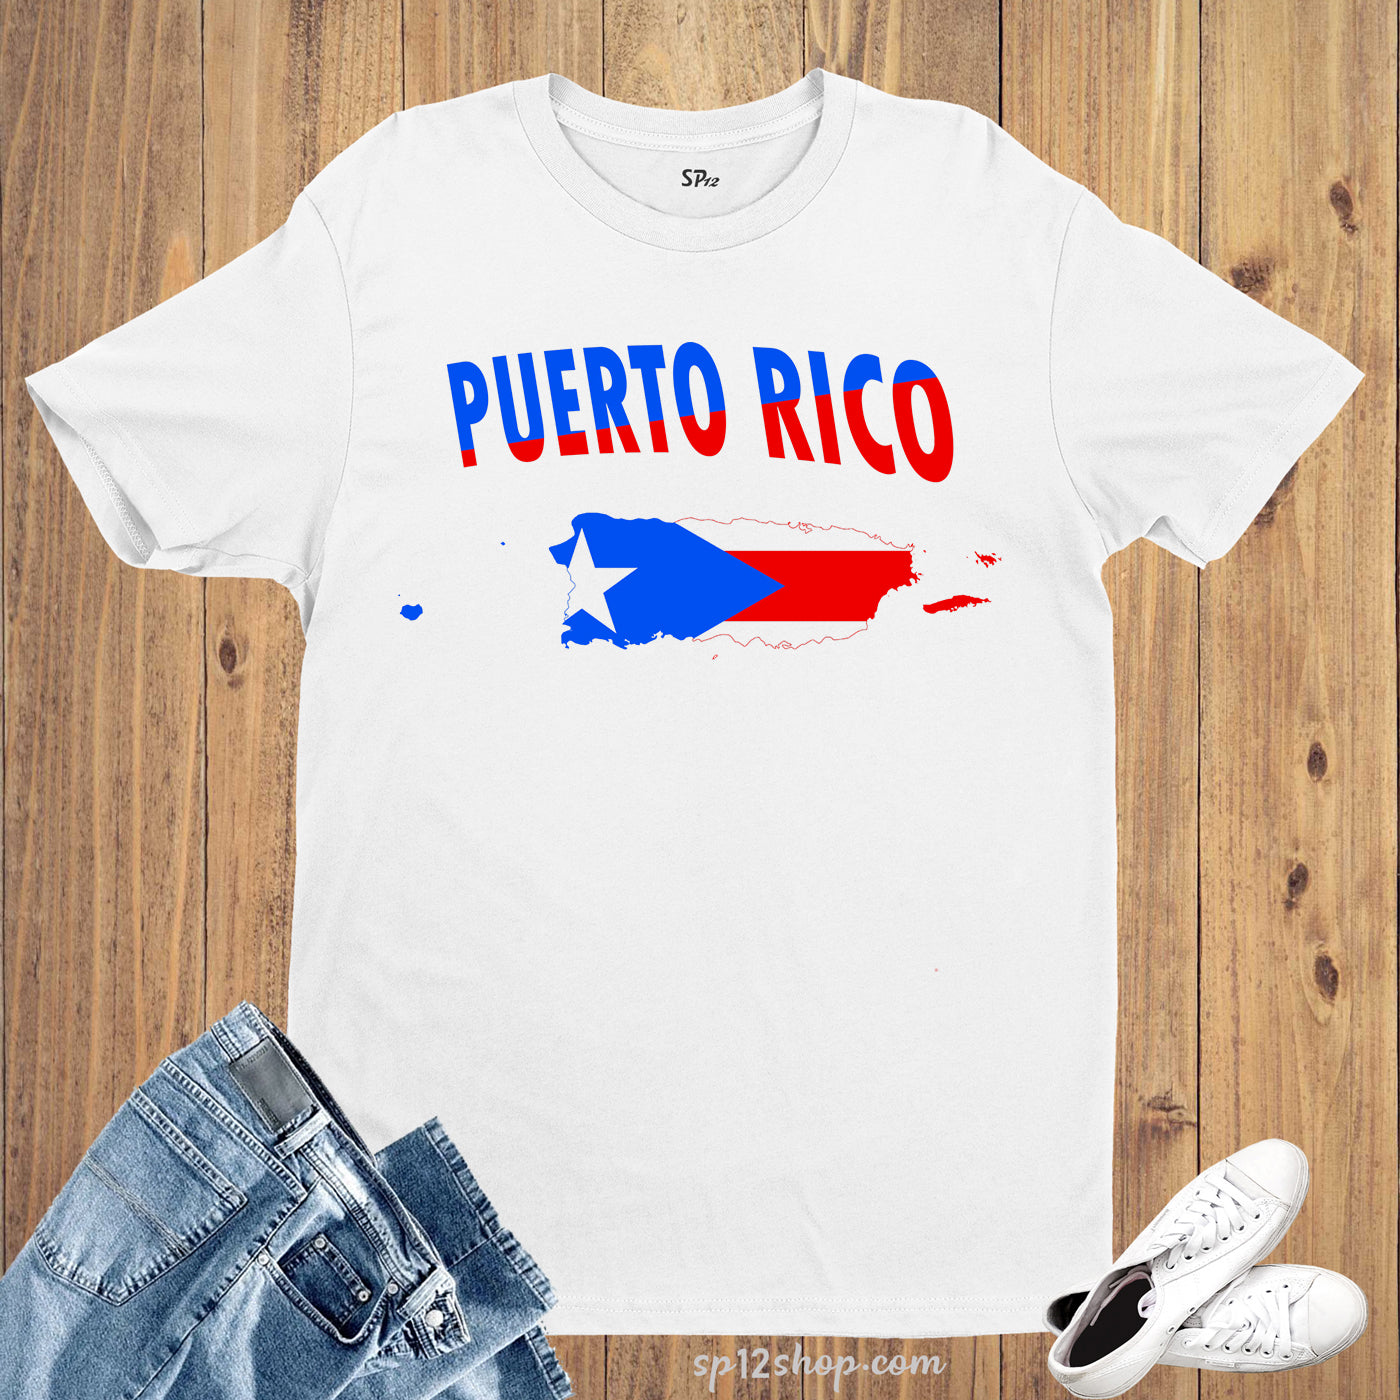 Puerto Rico Flag T Shirt Olympics FIFA World Cup Country Flag Tee Shirt